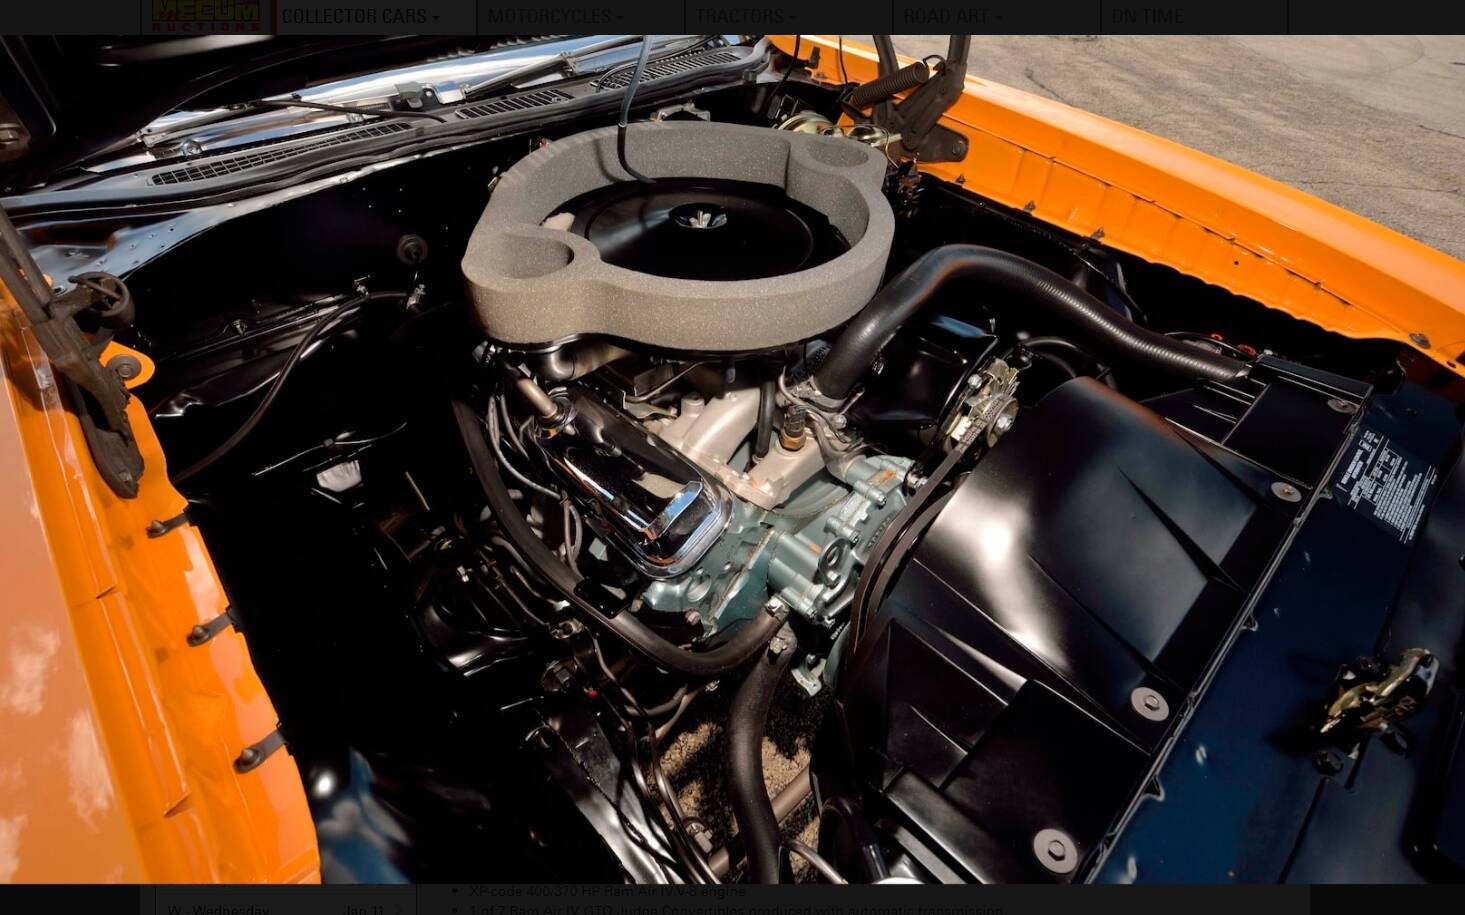 La Pontiac GTO la plus chère au monde vendue pour 1,5 million $ 558785-la-pontiac-gto-la-plus-chere-au-monde-vendue-pour-1-5-million